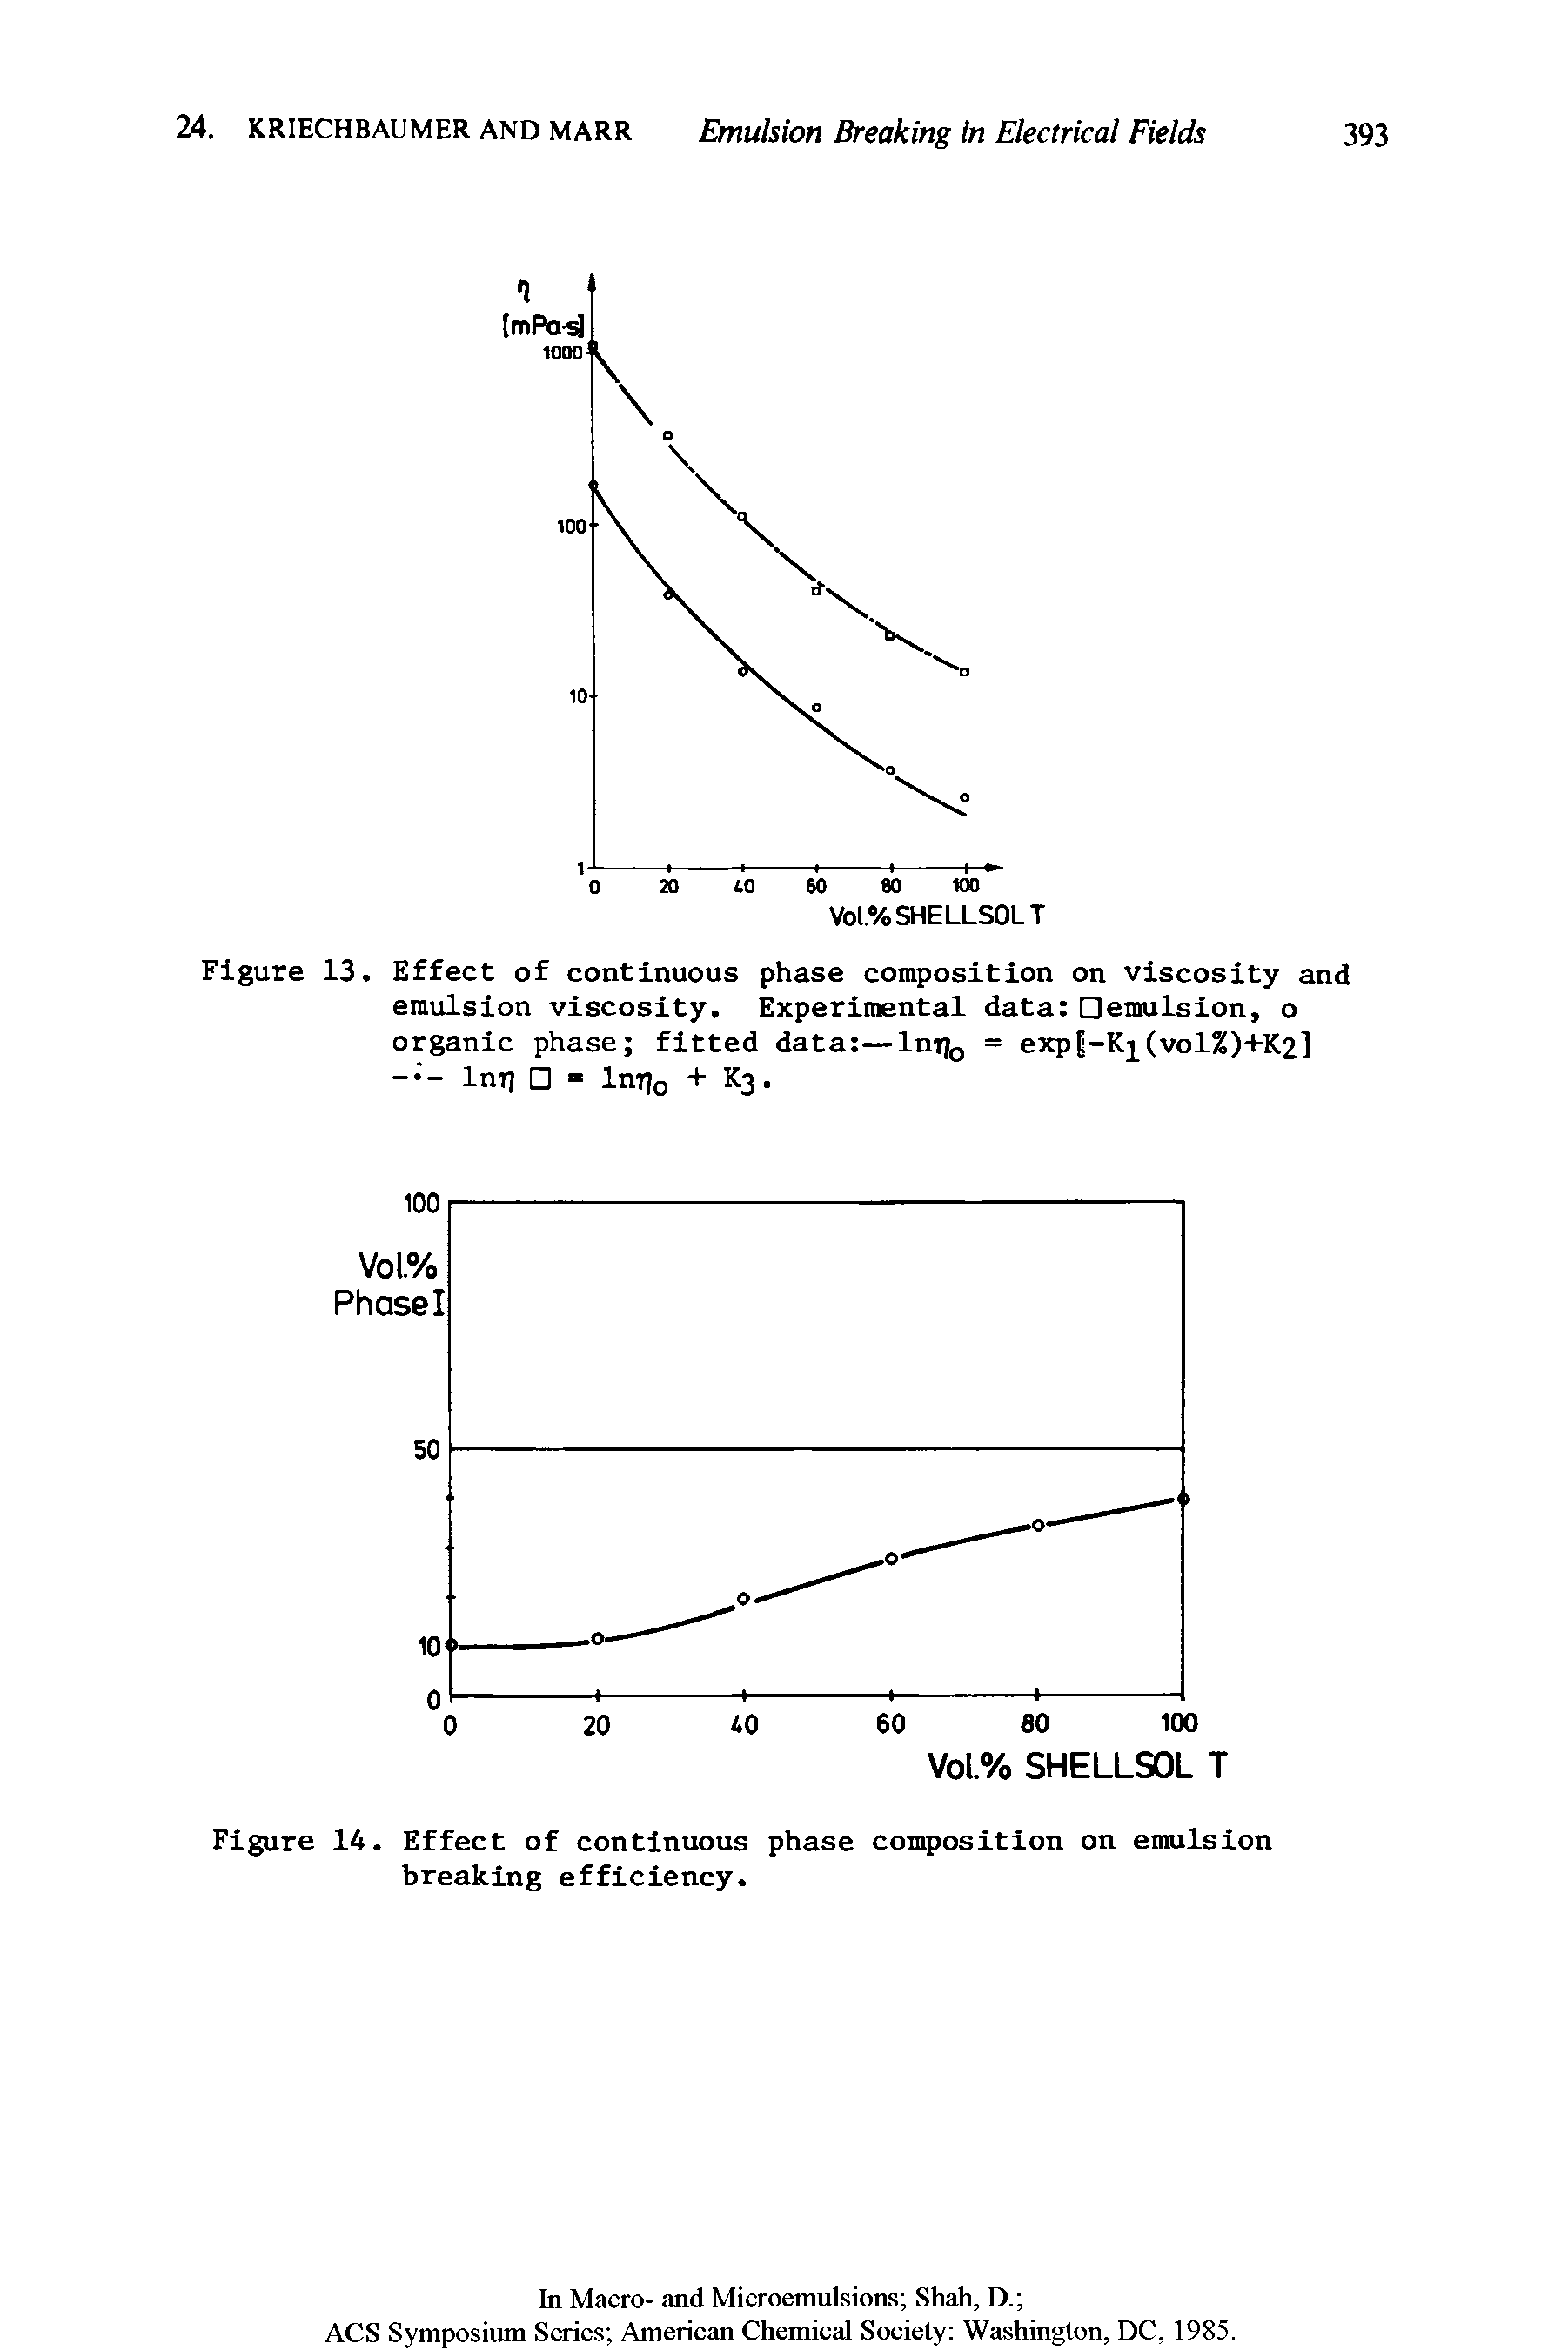 Figure 13. Effect of continuous phase composition on viscosity and emulsion viscosity. Experimental data Oemulsion, o organic phase fitted data —lnrj0 = exp -K (vol%)+K2] lnrj = lnri0 + K3.